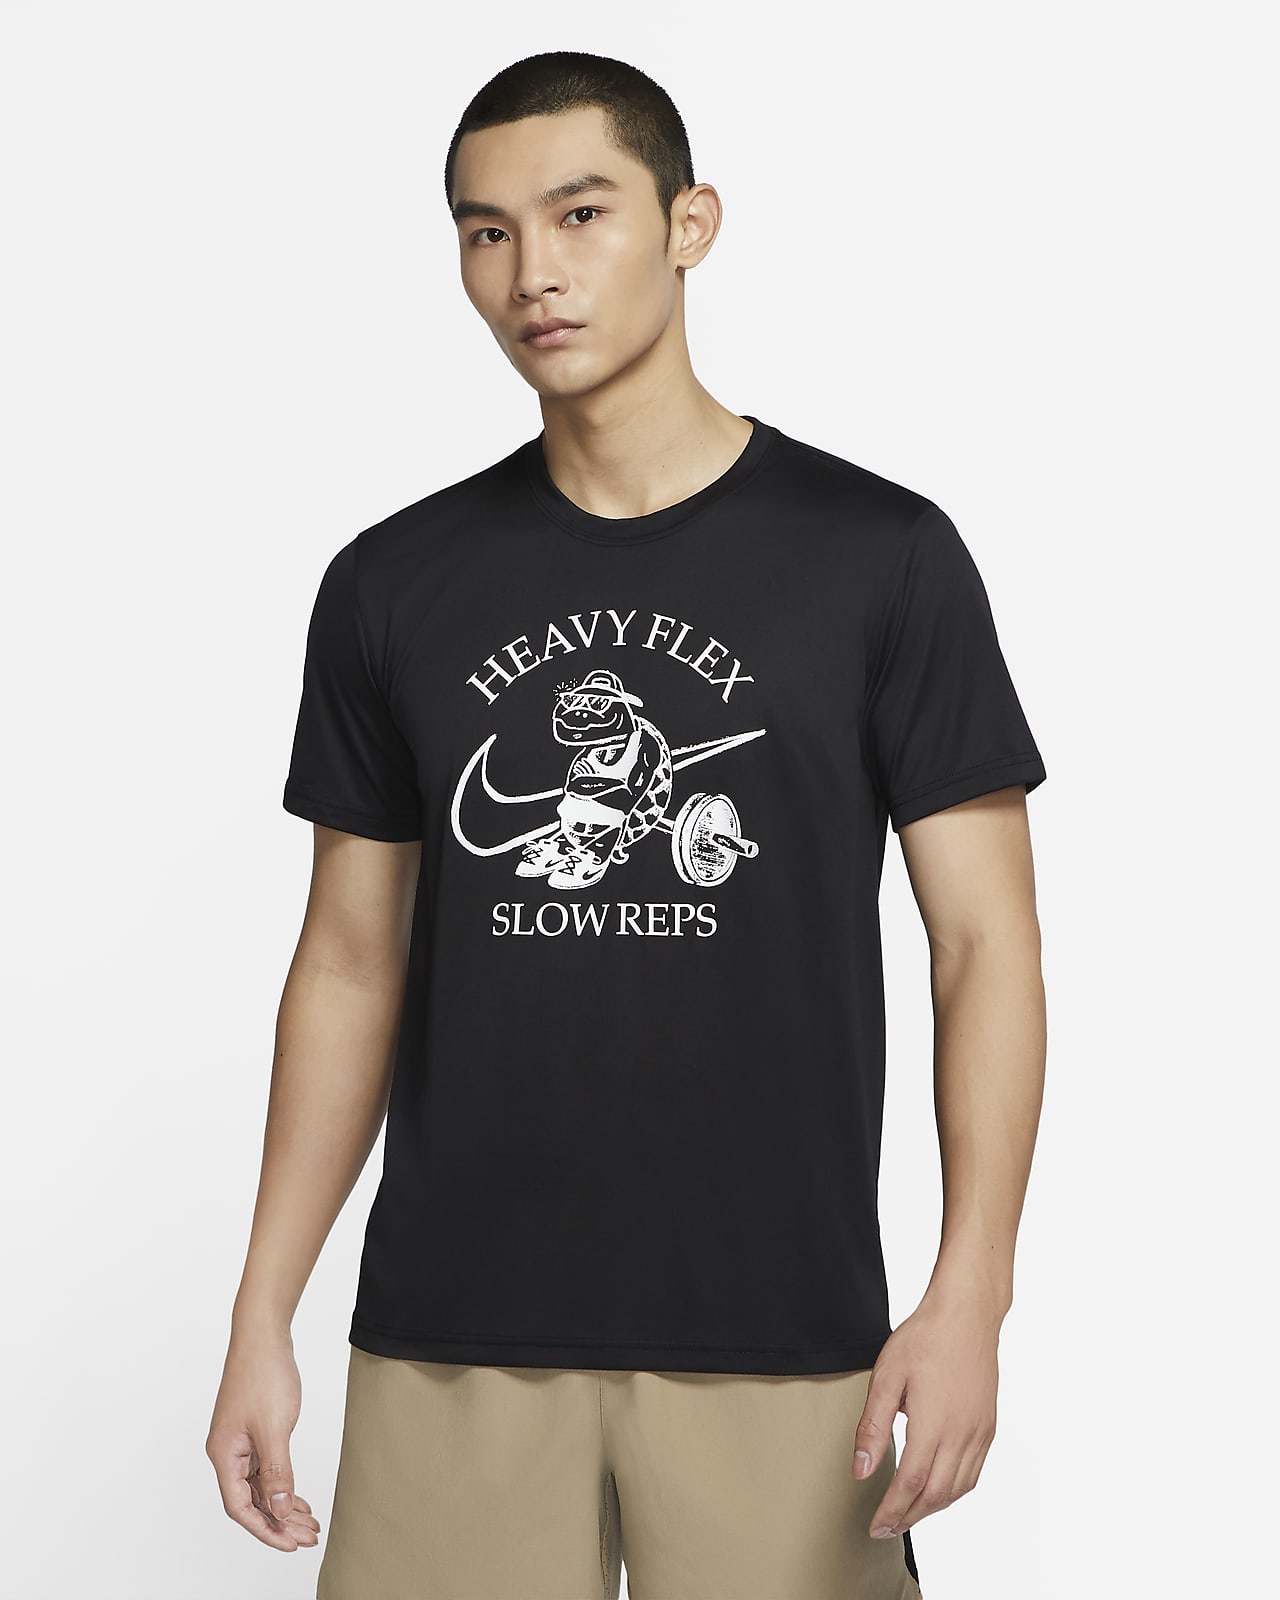 Nike Dri-FIT Legend Men's Graphic Training T-Shirt